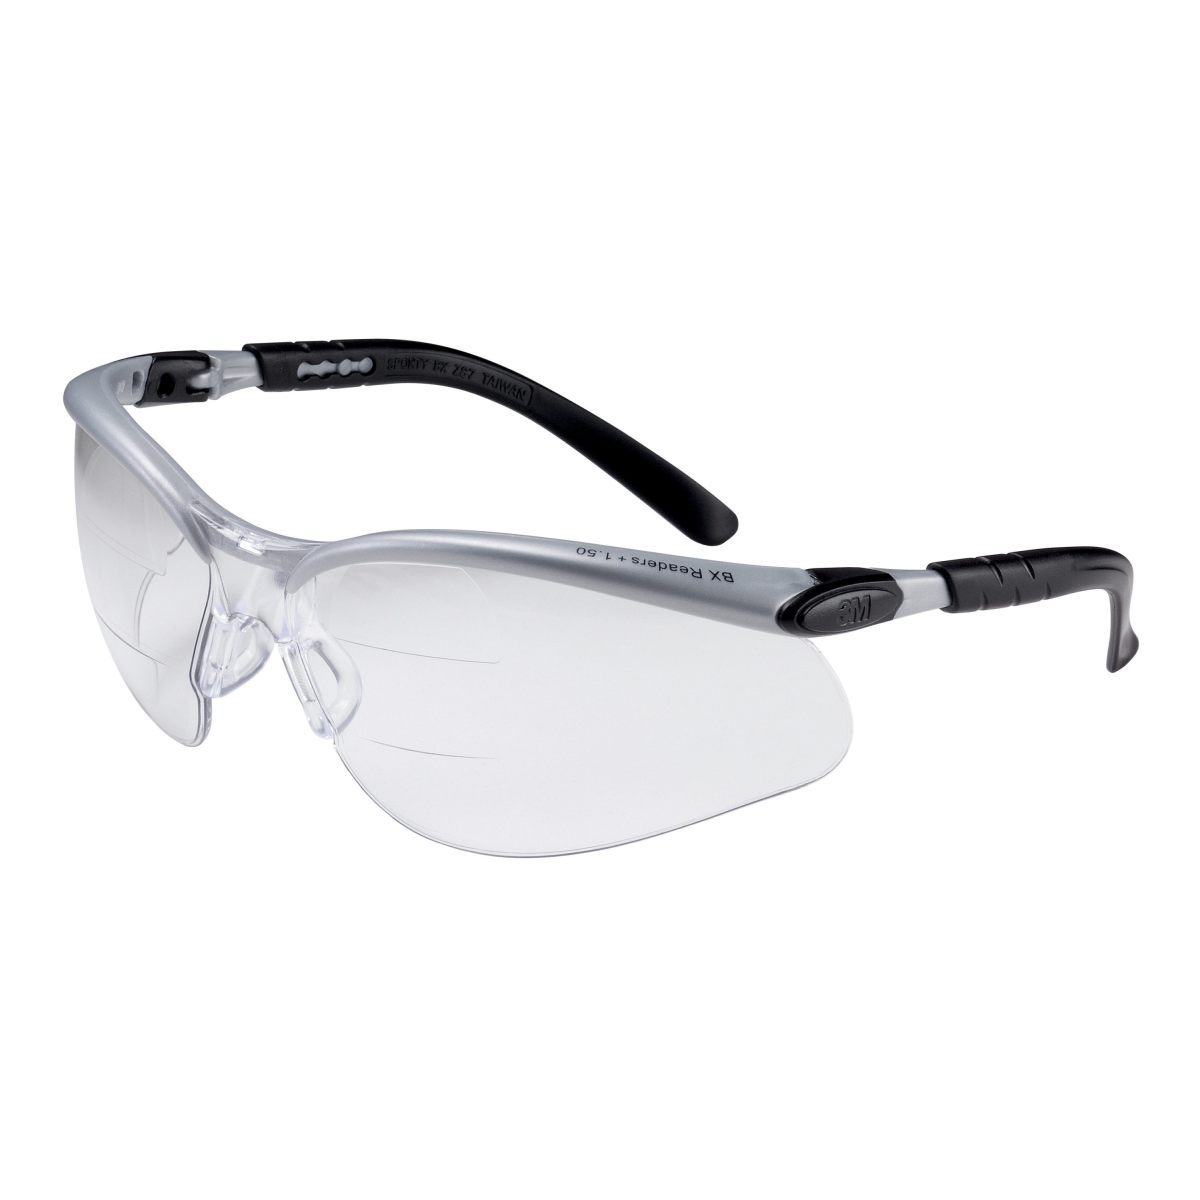 3M™ BX™ Dual Reader Protective Eyewear 11457-00000-20 Clear Anti-Fog Lens, Silver/Black Frame, +1.5 Top/Bottom Diopter (Availabi